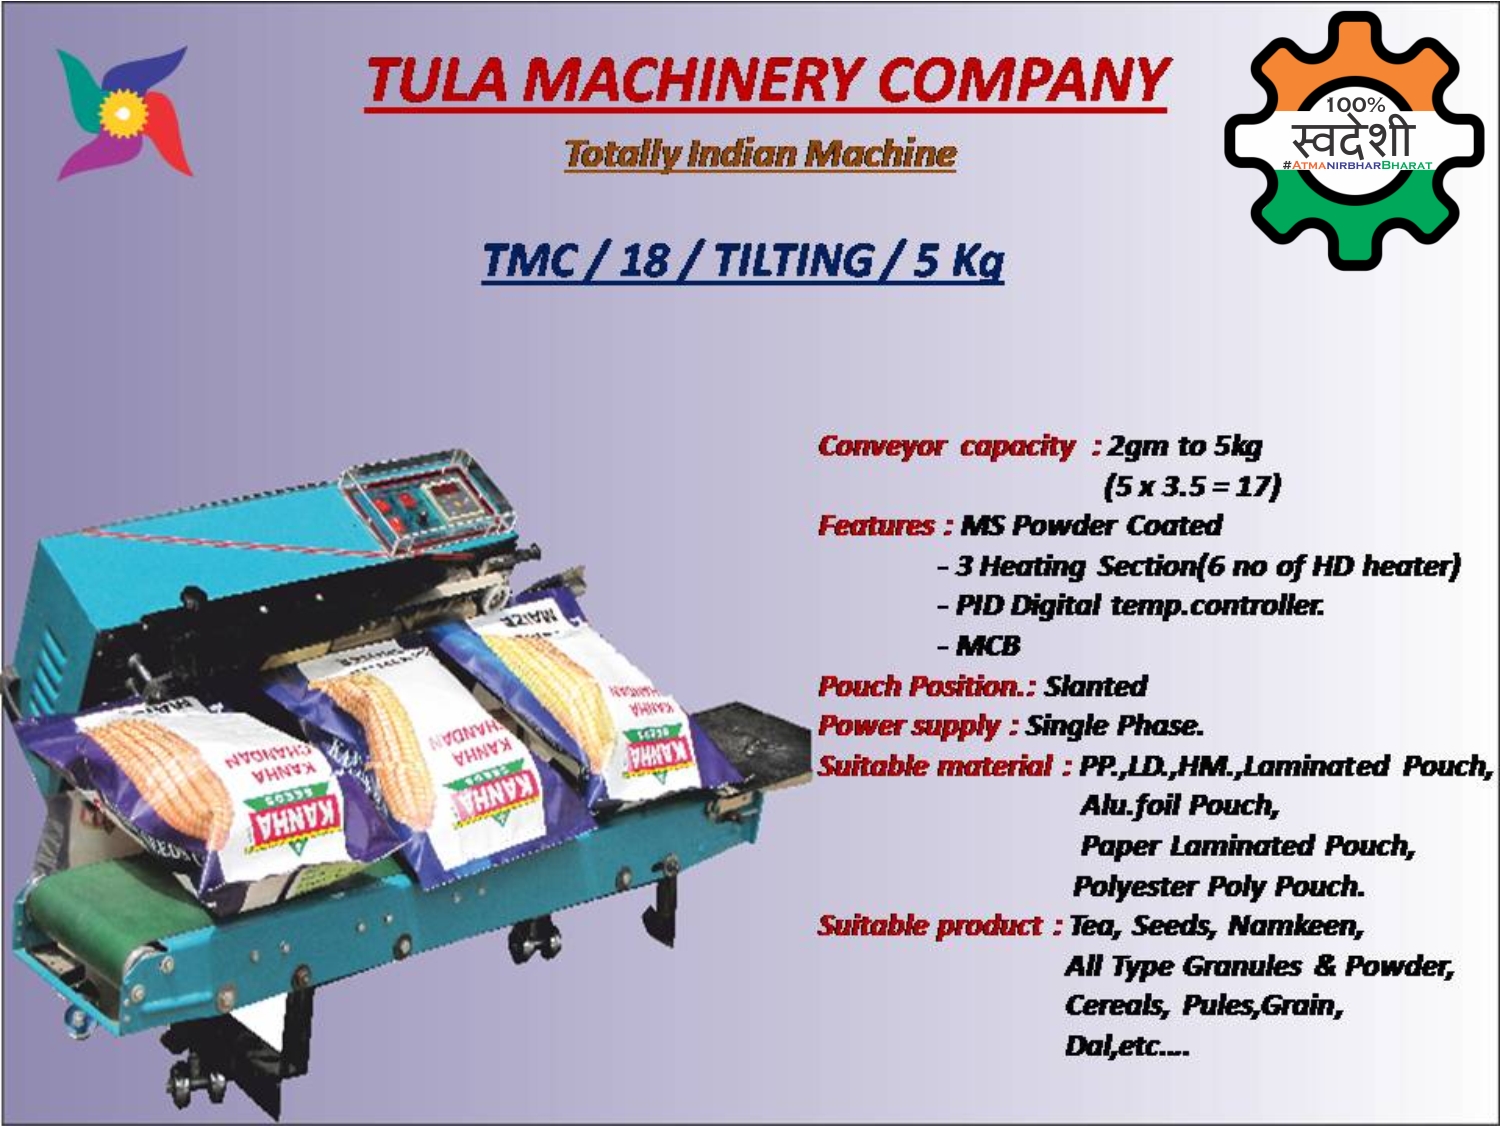 Tilting model - Packing machine